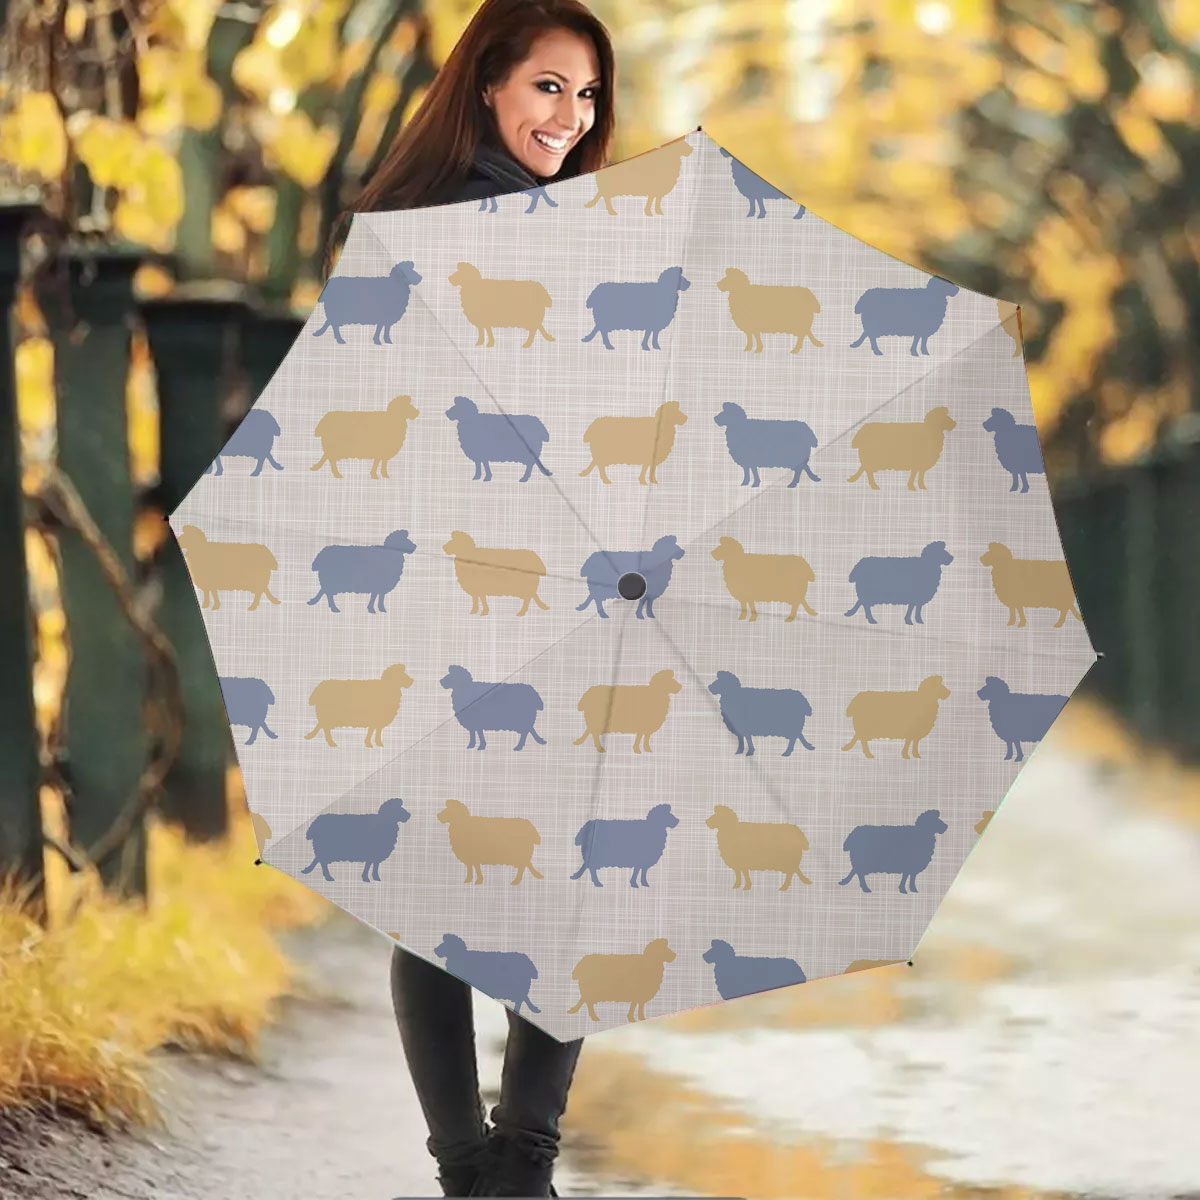 Sheep Silhouette Pattern Umbrella